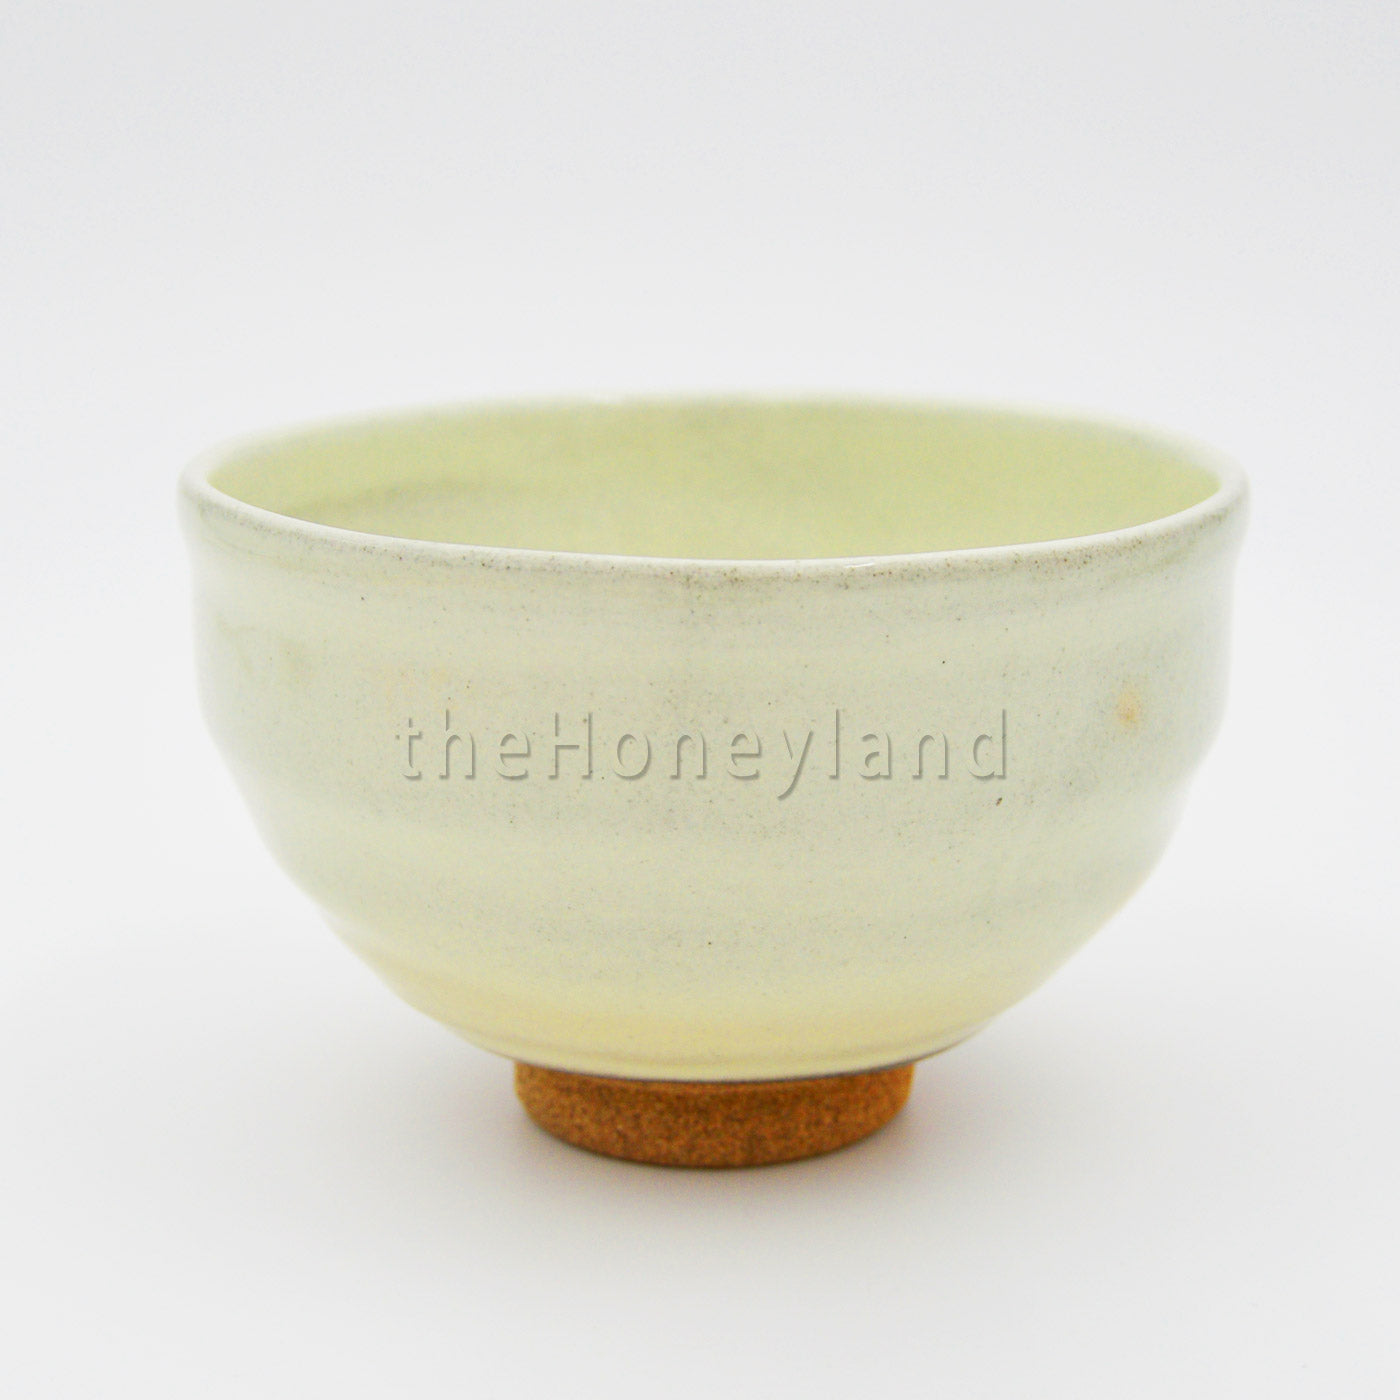 Handcrafted ceramic Matcha chawan - Japan